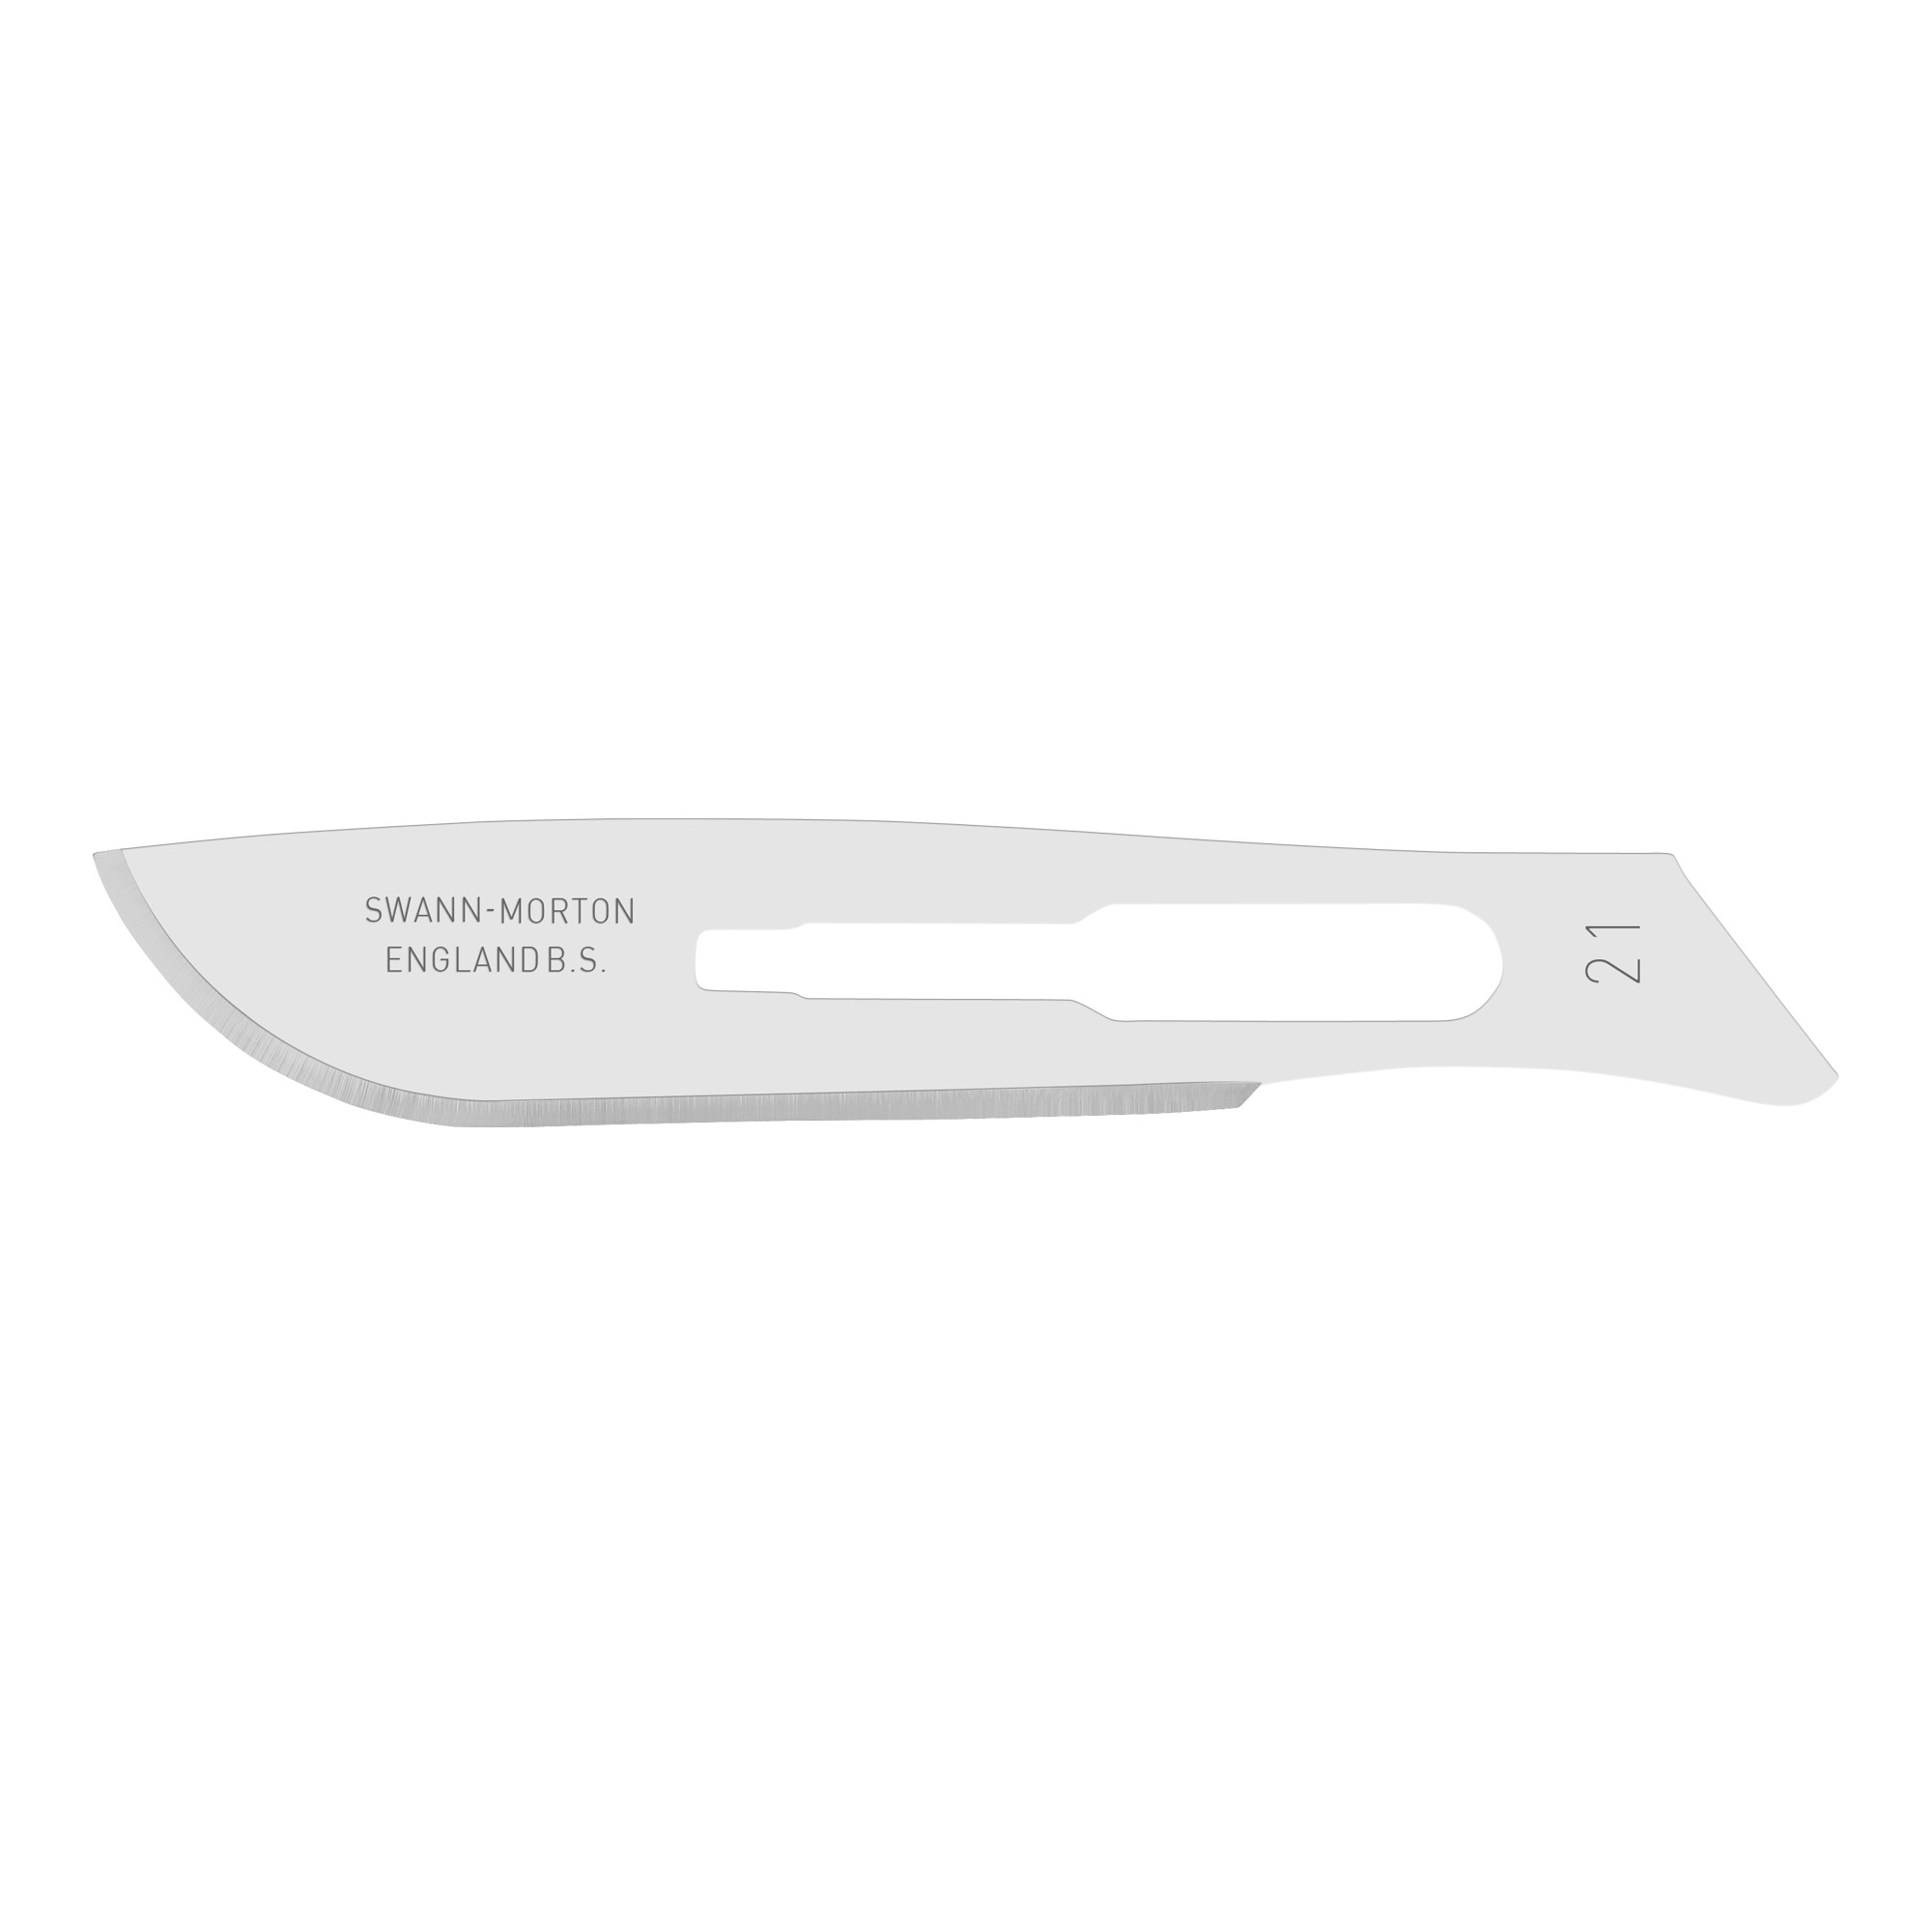 Sterile single-use professional scalpel blades Swann-Morton size 21 100 pcs